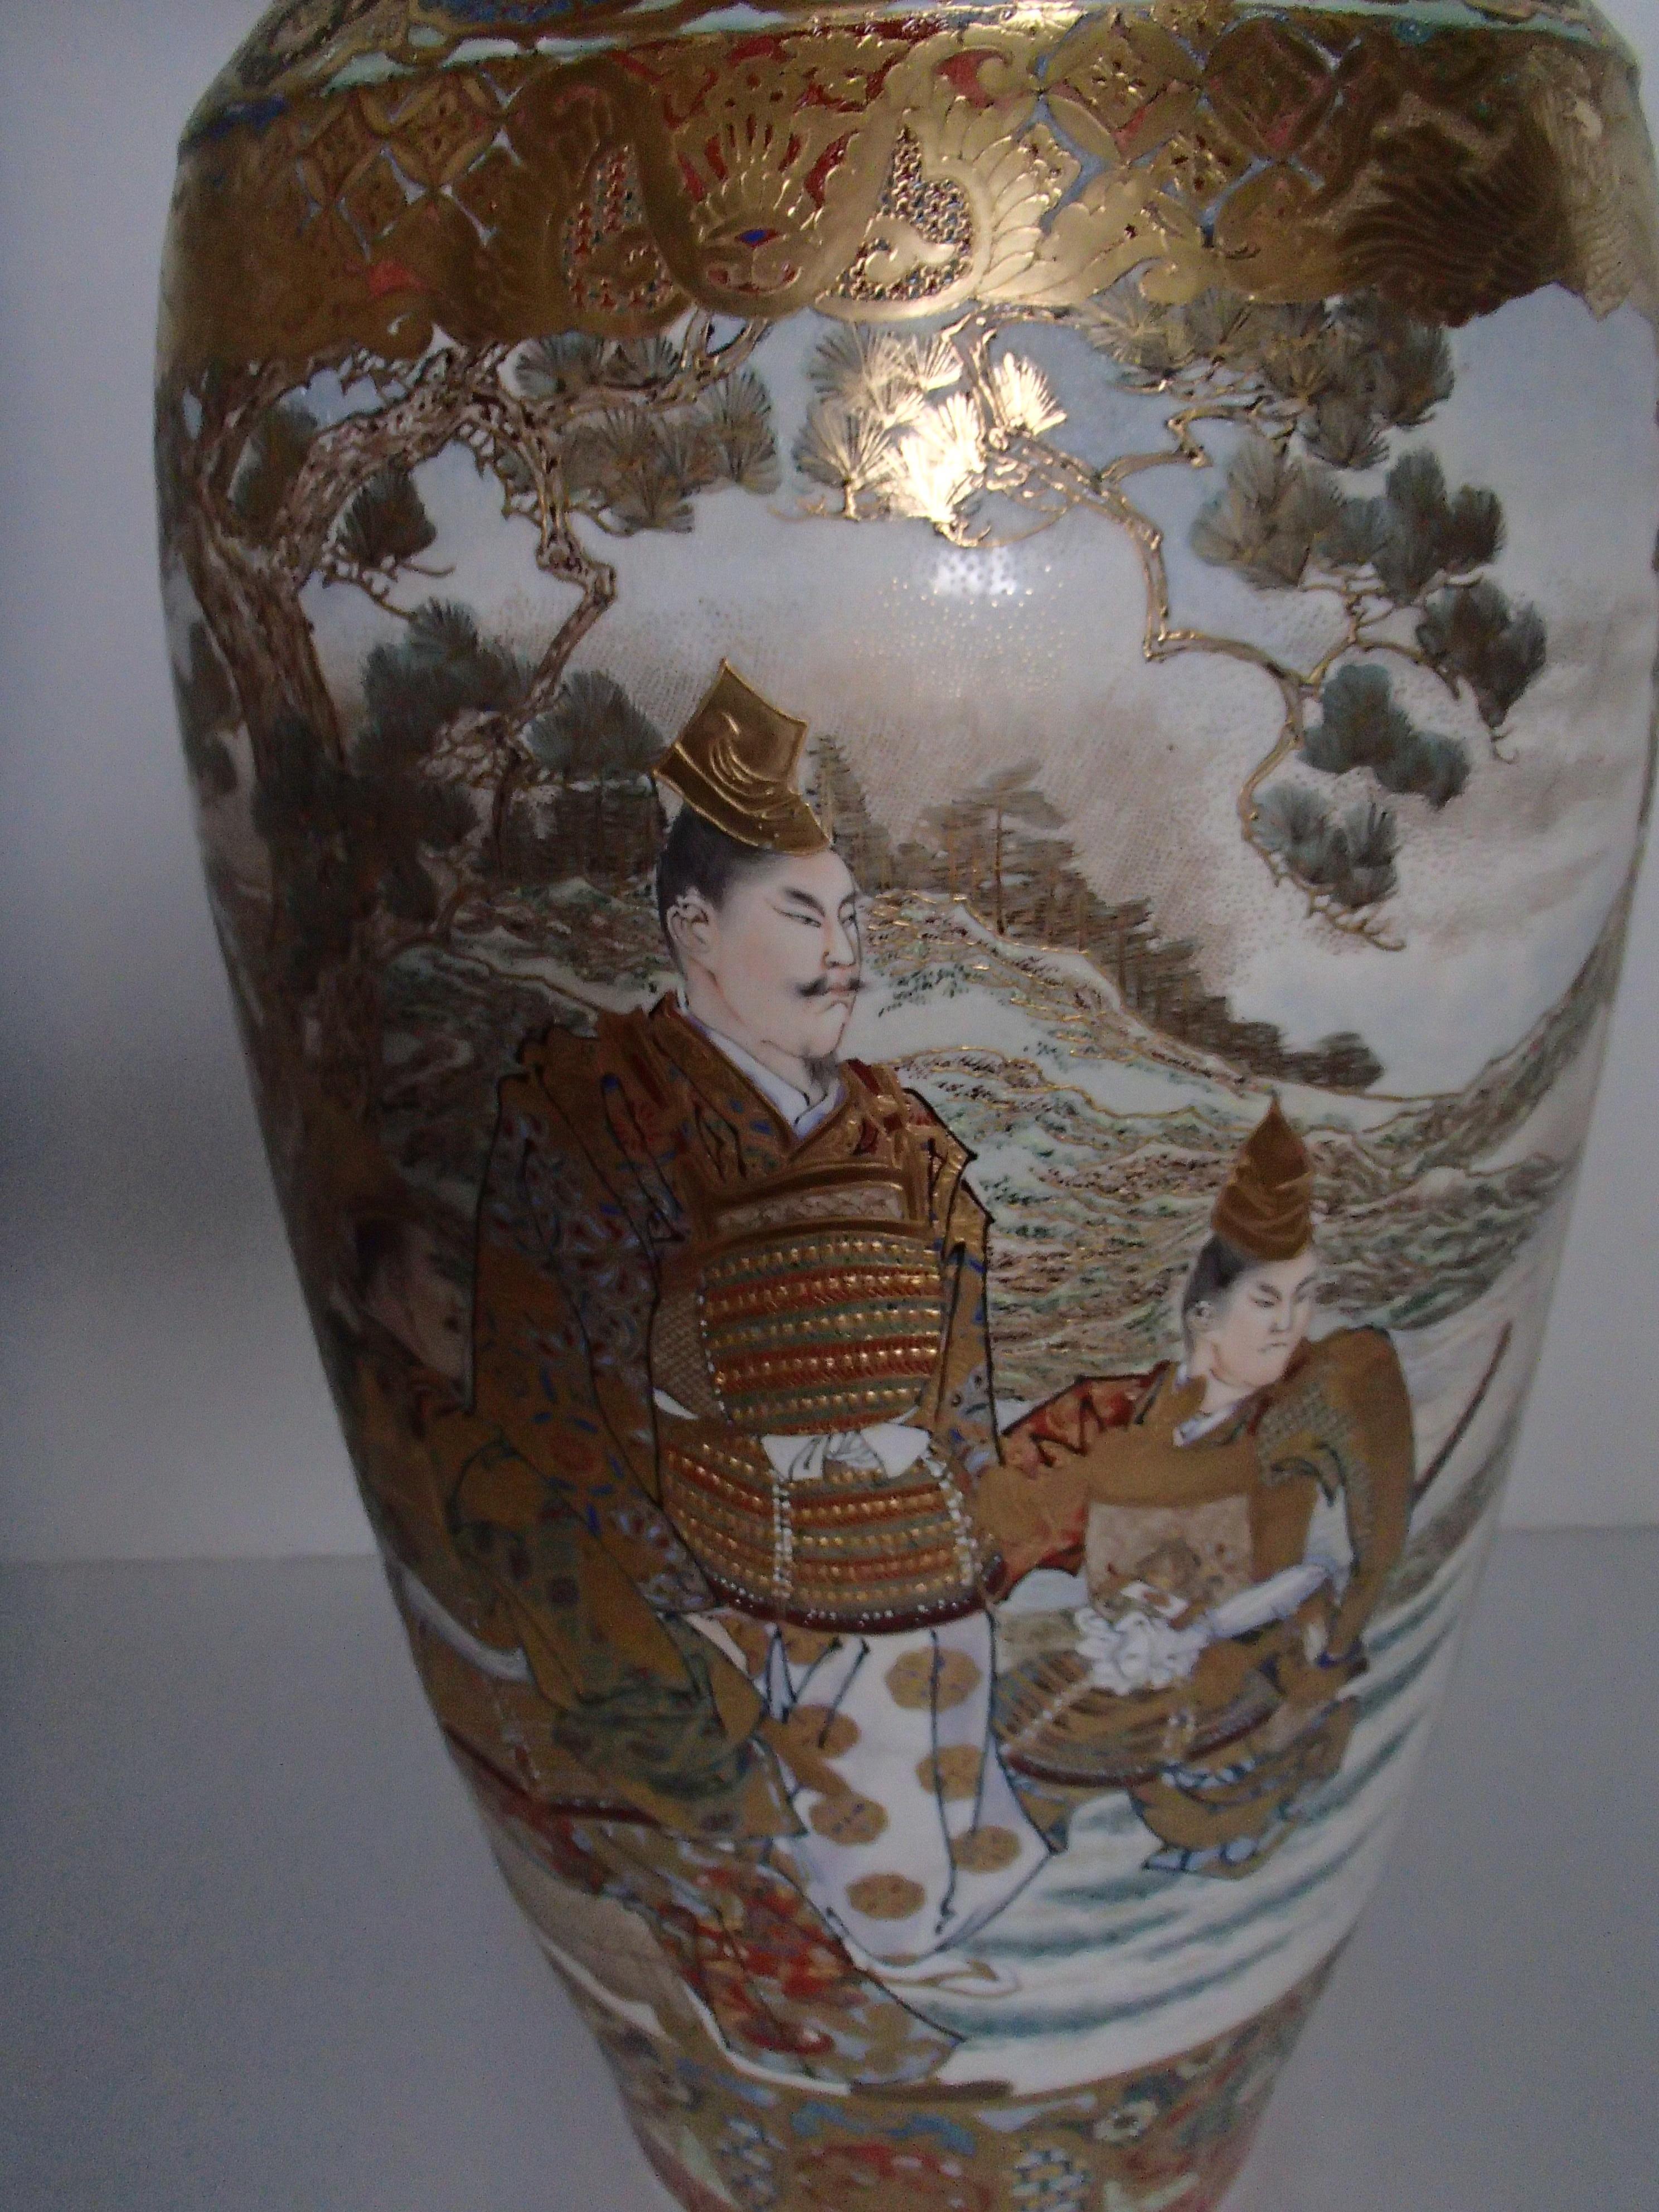 1900 Japanese Satsuma Porcelain Huge Vase with Samurai Scenes For Sale 1